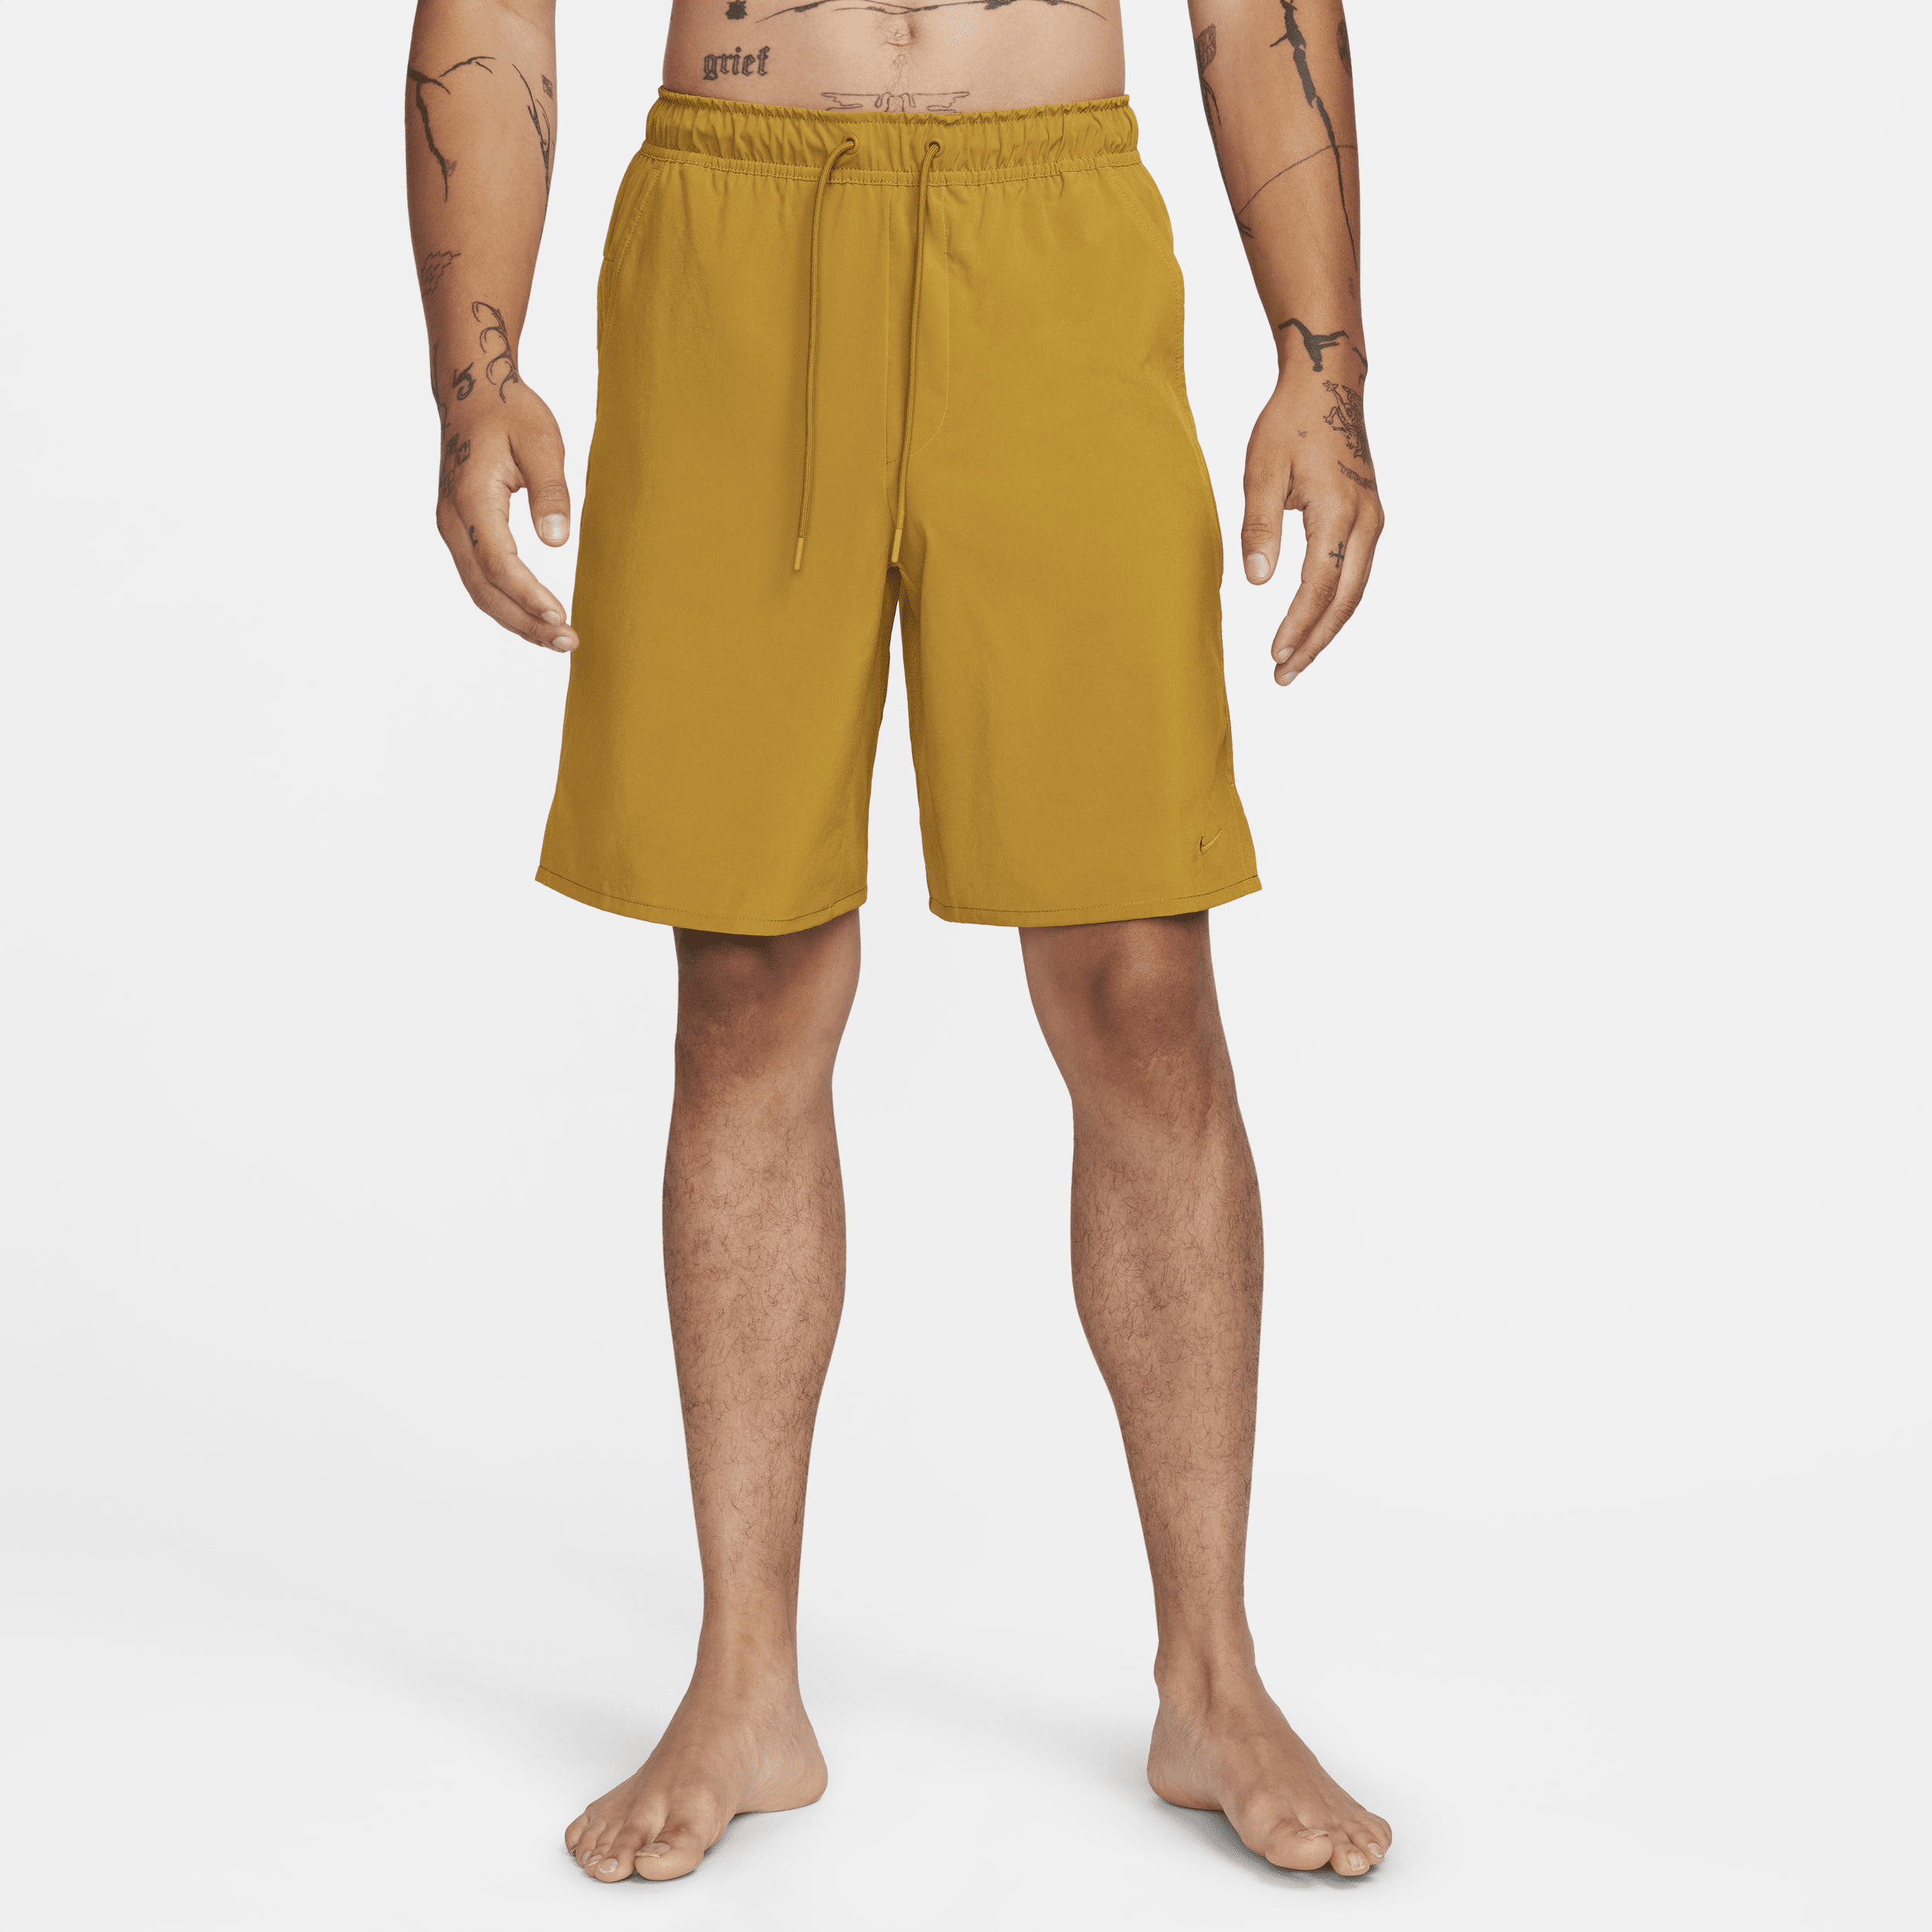 Nike Unlimited Pantalón corto versátil Dri-FIT de 23 cm sin forro - Hombre - Marrón